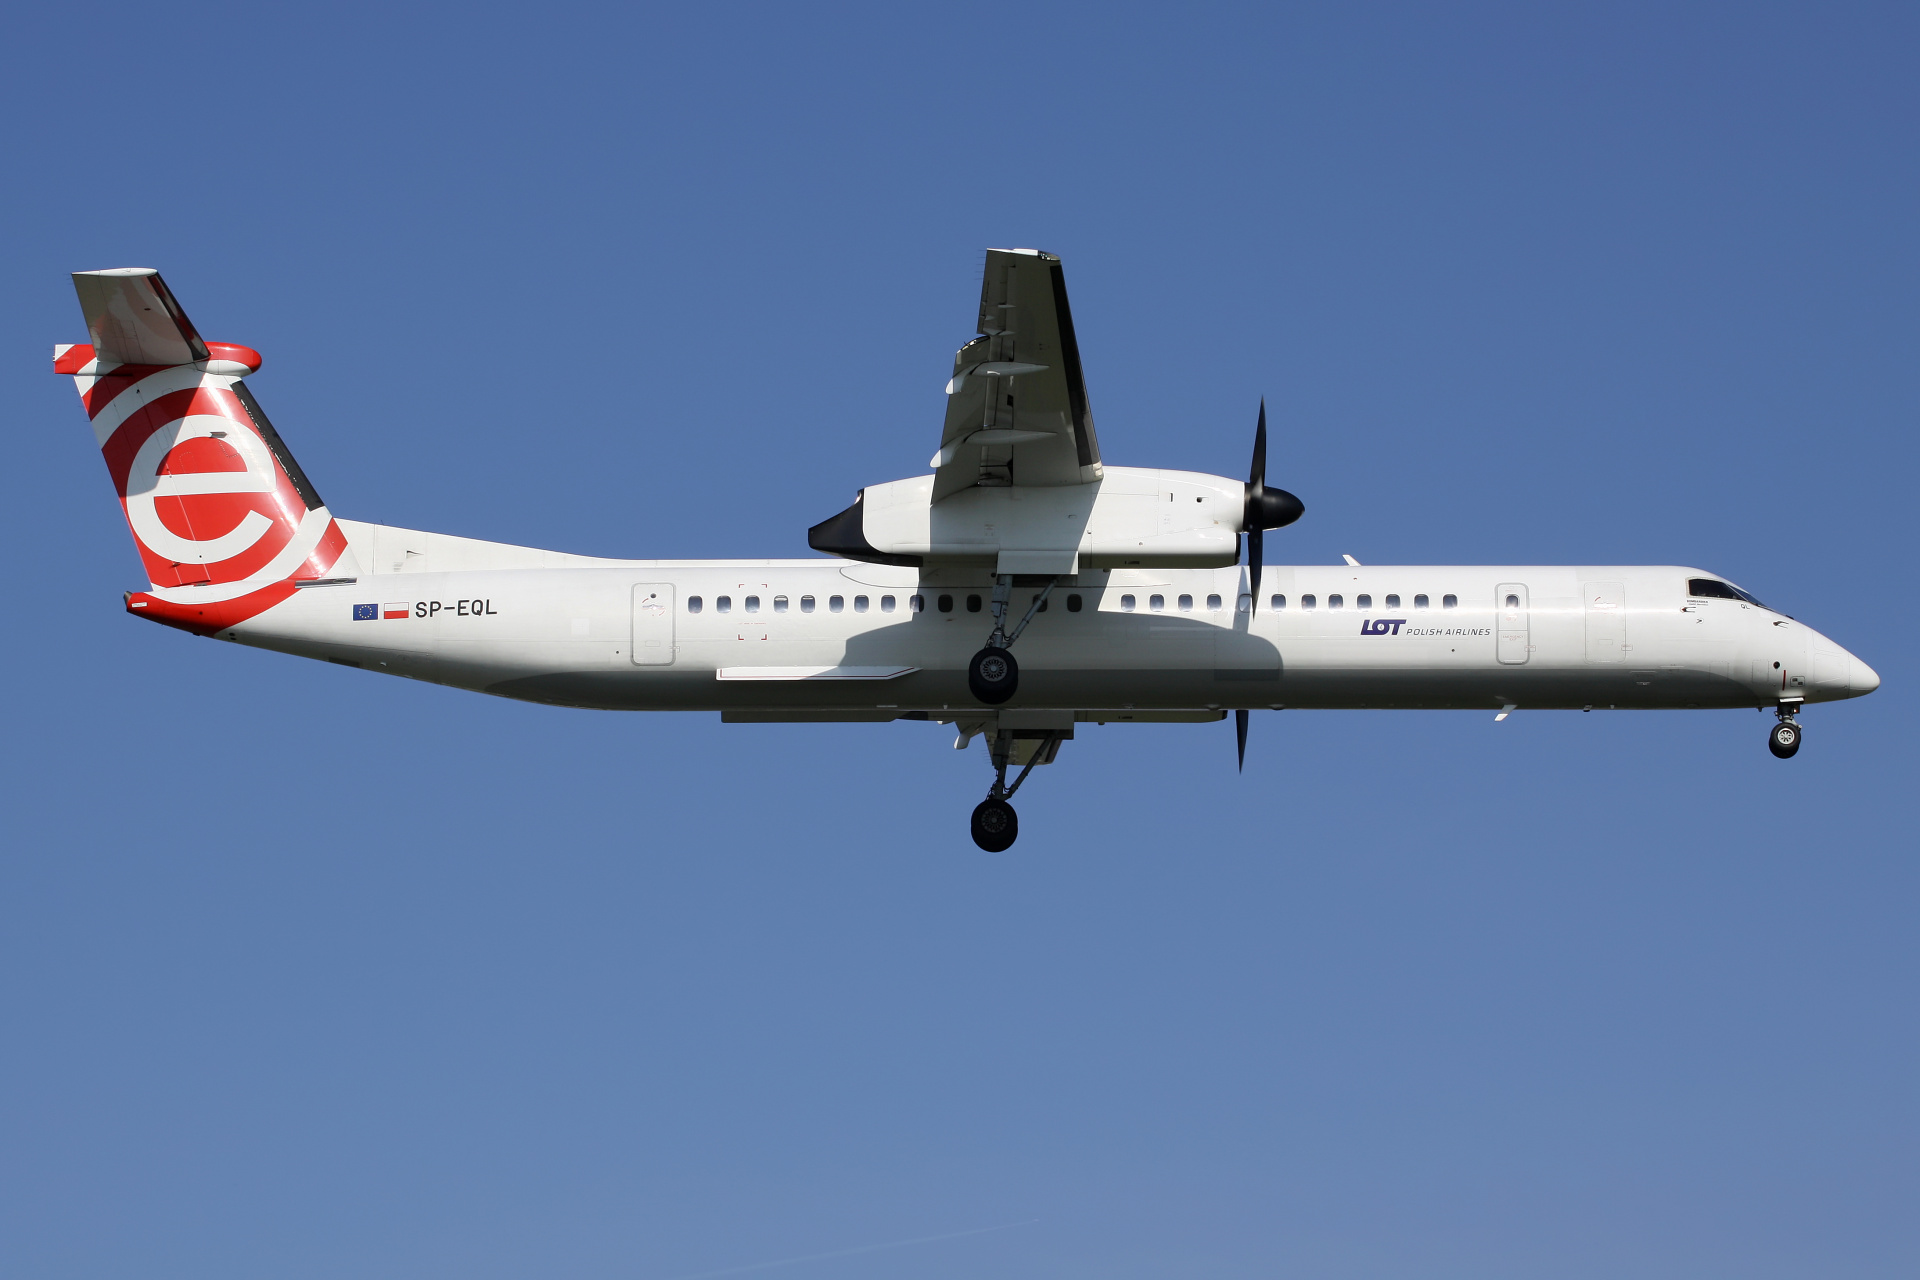 SP-EQL (EuroLOT partial livery) (Aircraft » EPWA Spotting » De Havilland Canada DHC-8 Dash 8 » LOT Polish Airlines)